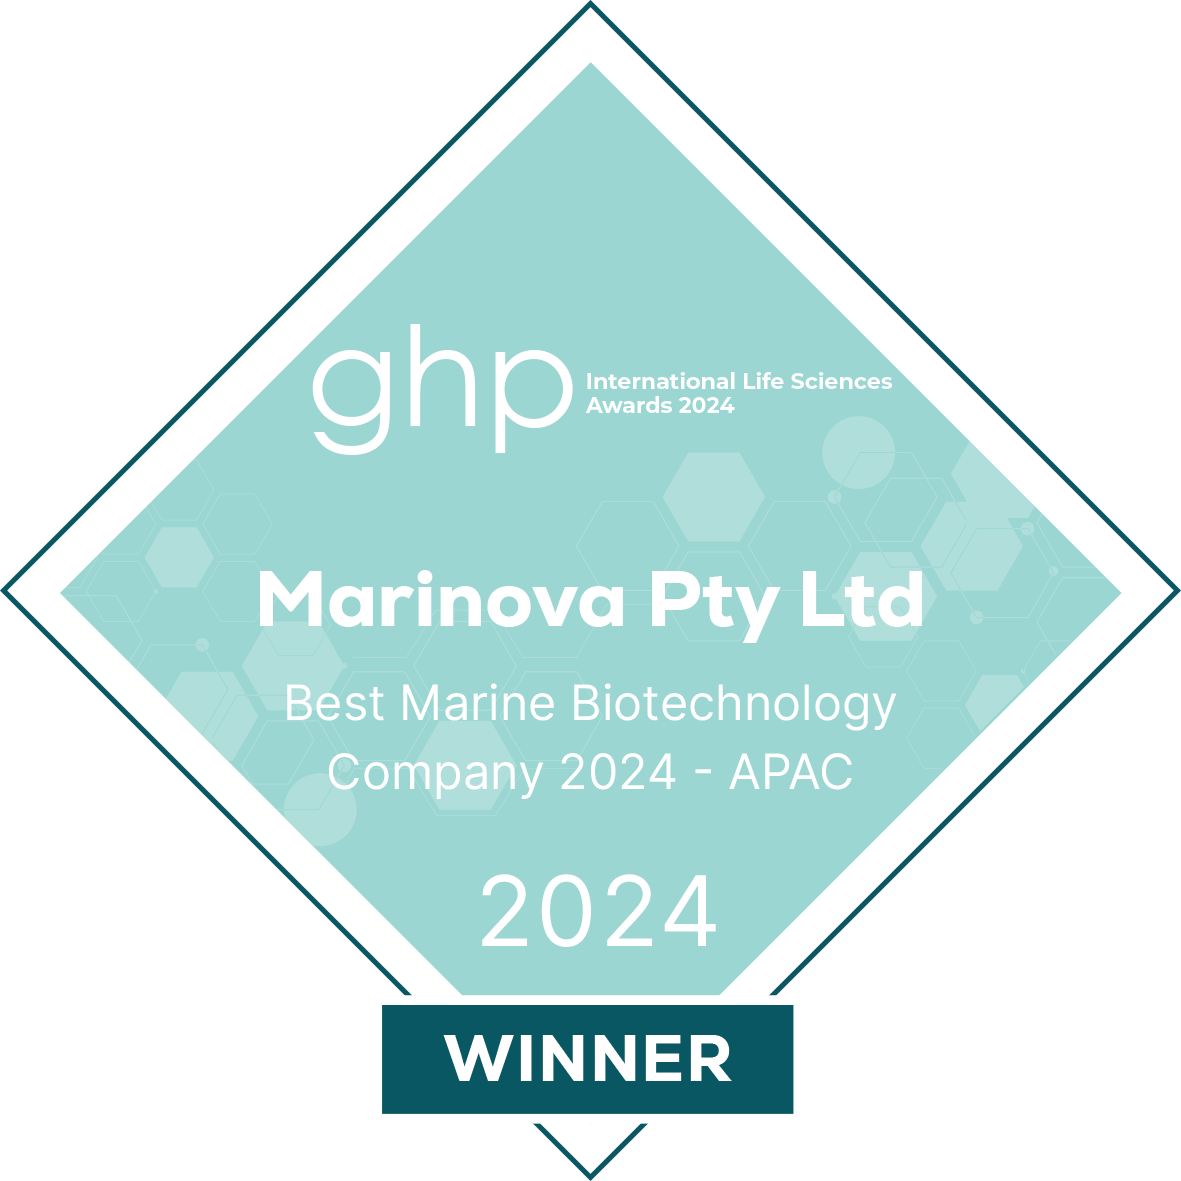 GHP International Life Sciences Awards 2024 – Marinova Pty Ltd – Best Marine Biotechnology Company 2024 – Winner